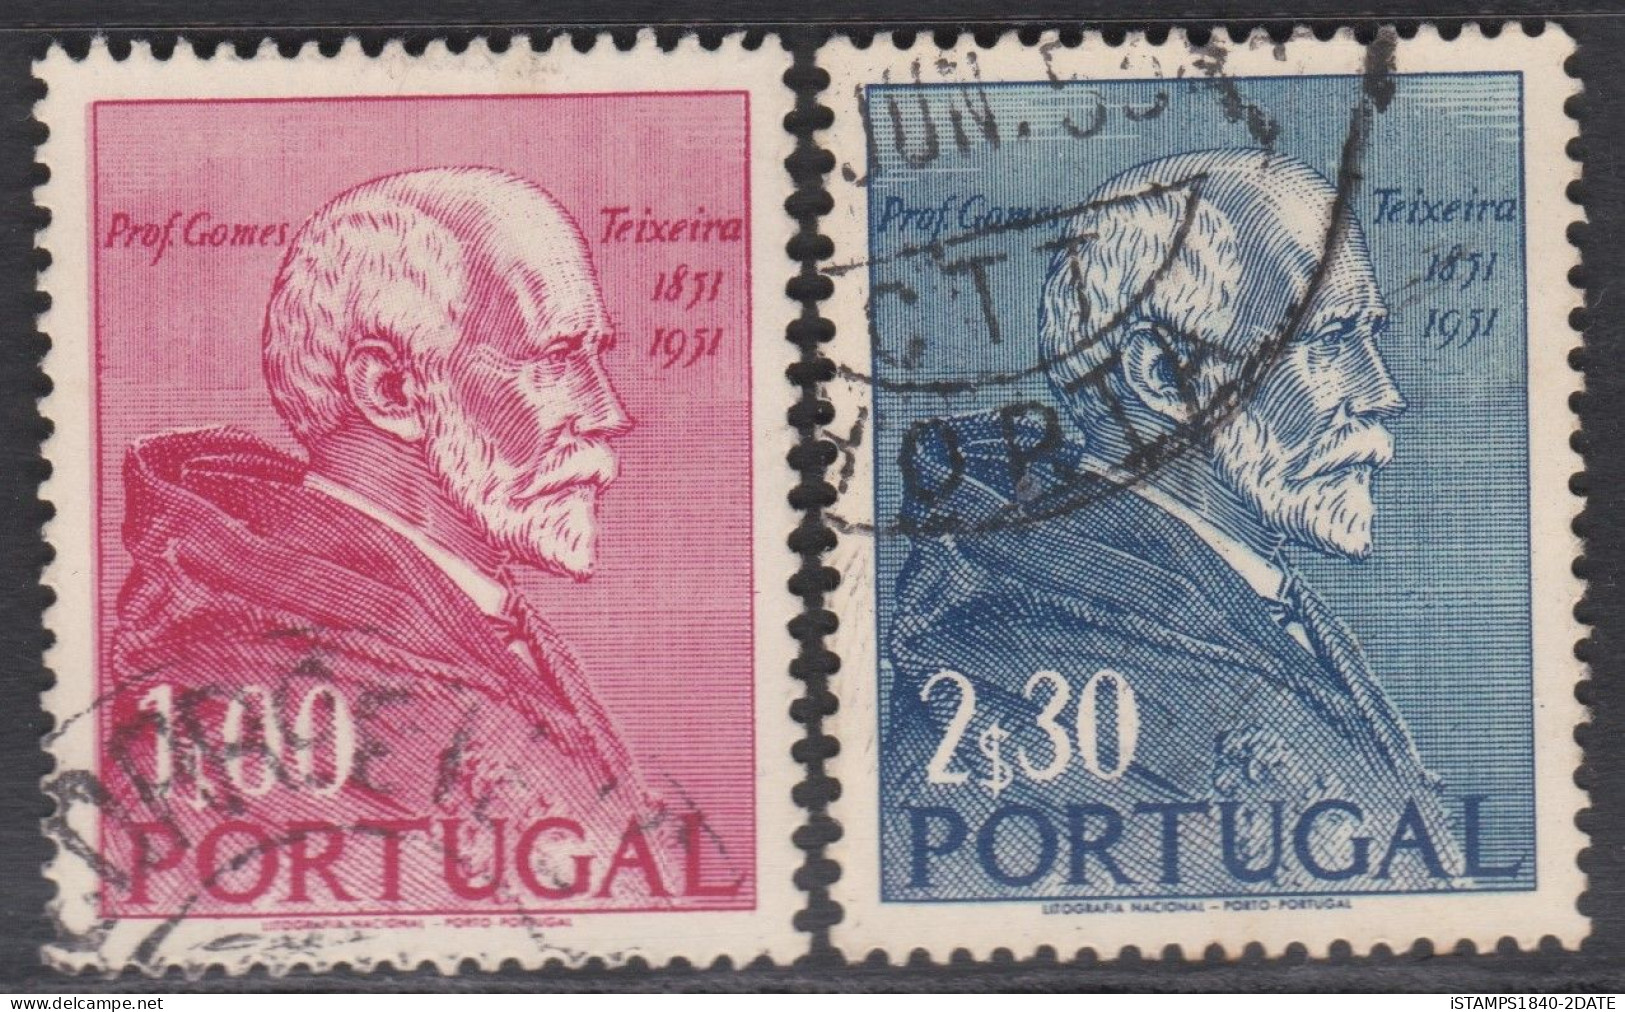 00486/ Portugal 1952 Sg1069/70 Fine Used Set Of 2 Birth Centenary Of Professor Gomes Cv £7 - Neufs